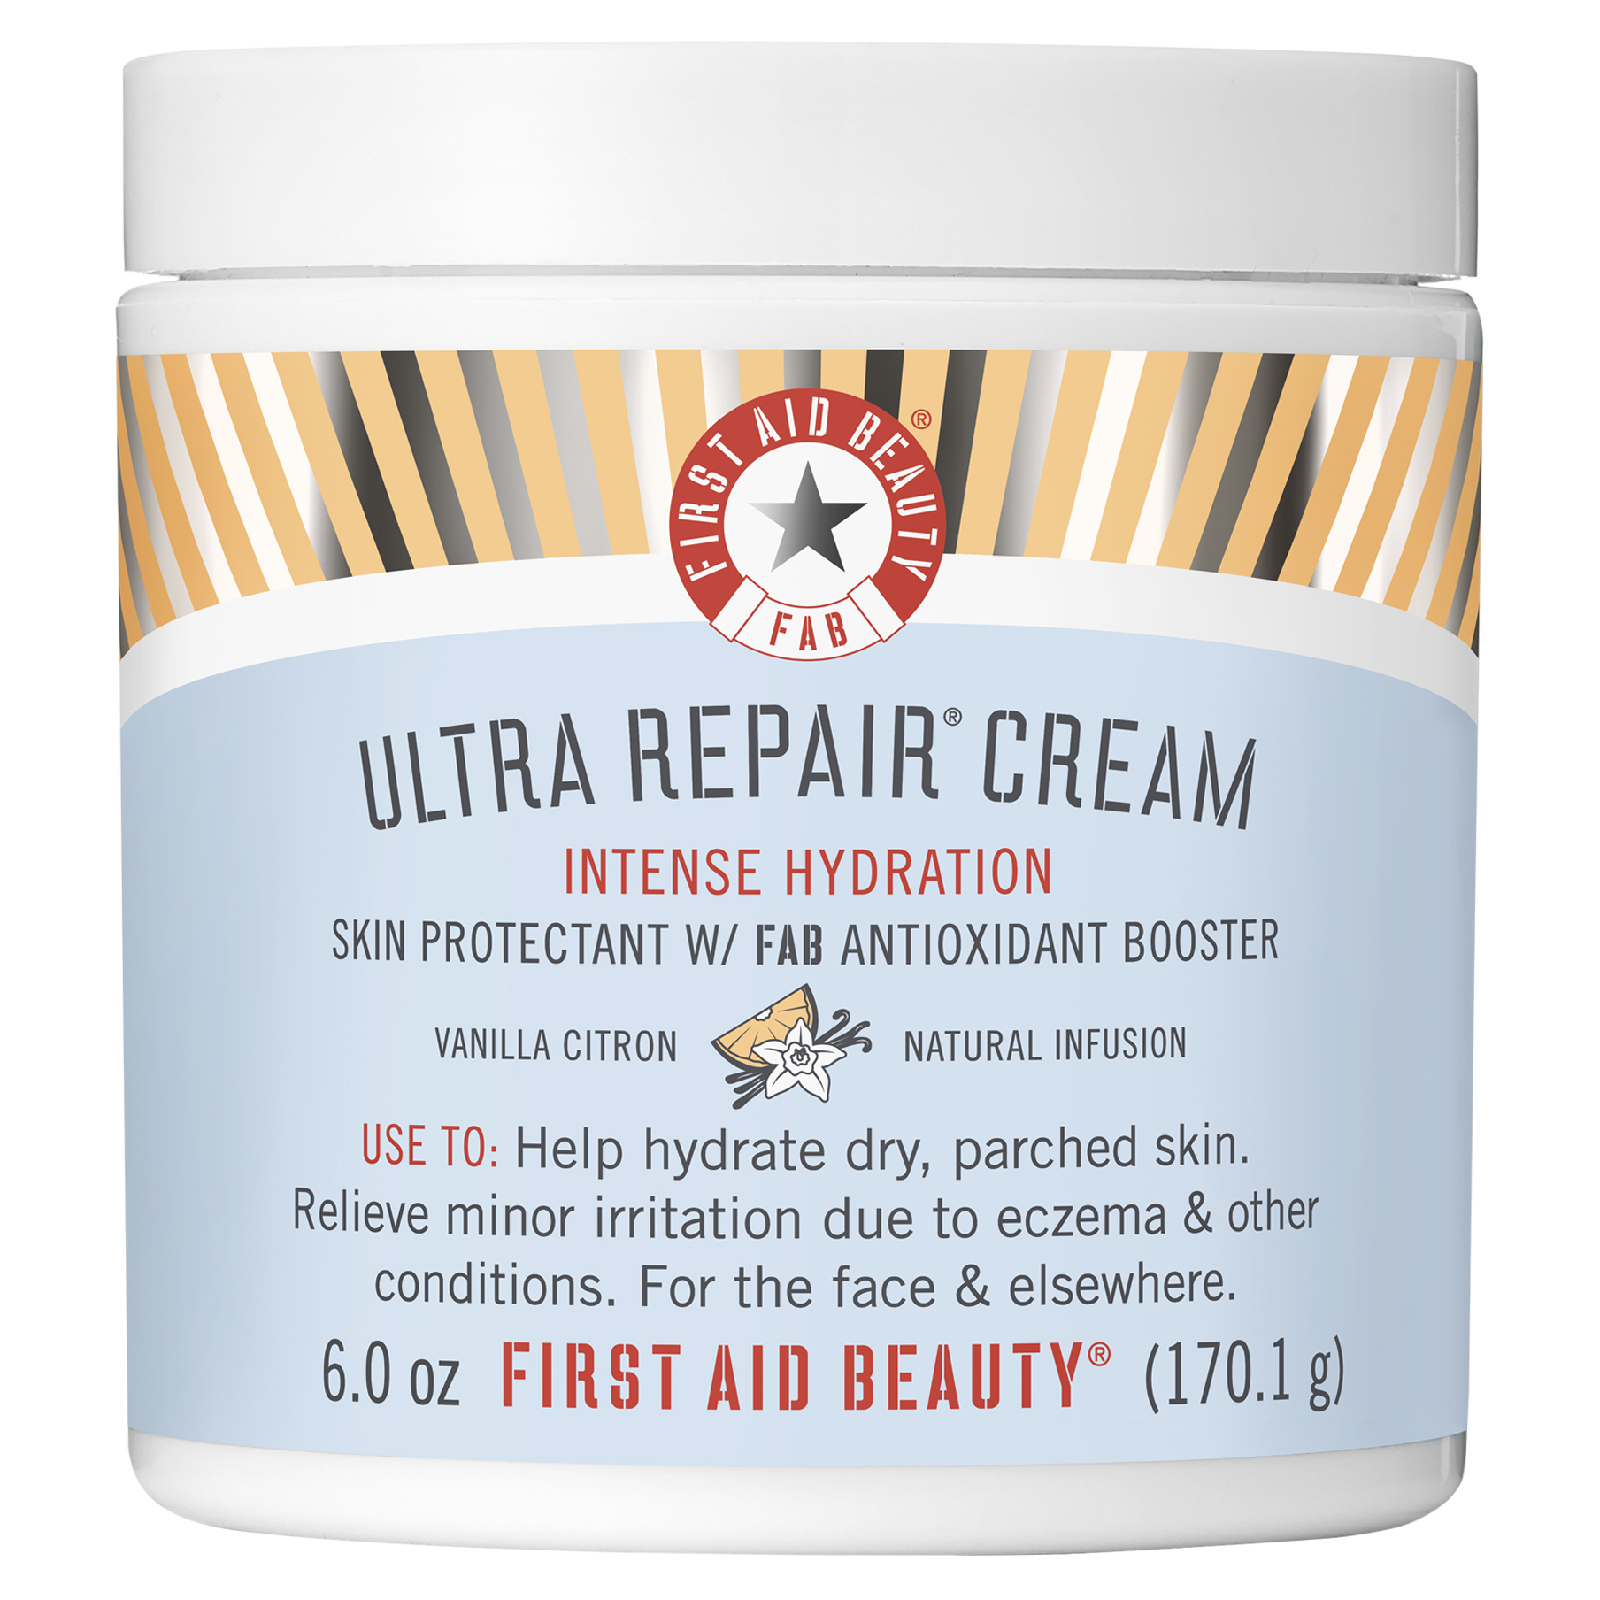 Crema Ultra Repair® Vanilla Citron de First Aid Beauty (170 g)